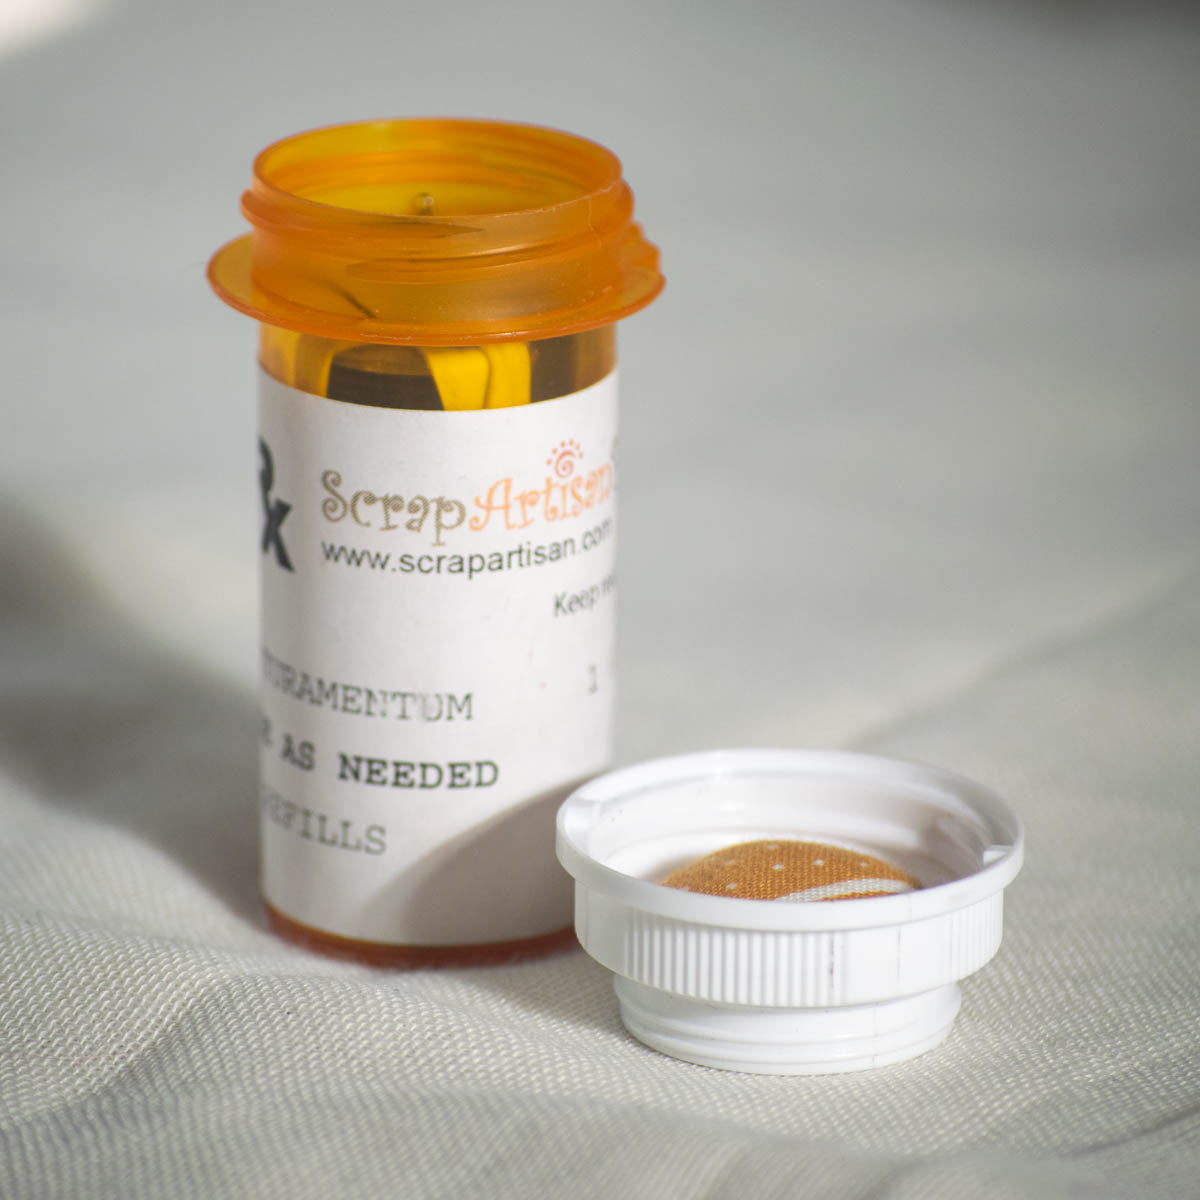 Upcycled Prescription Bottle Sewing Kit — Prescription Label, open